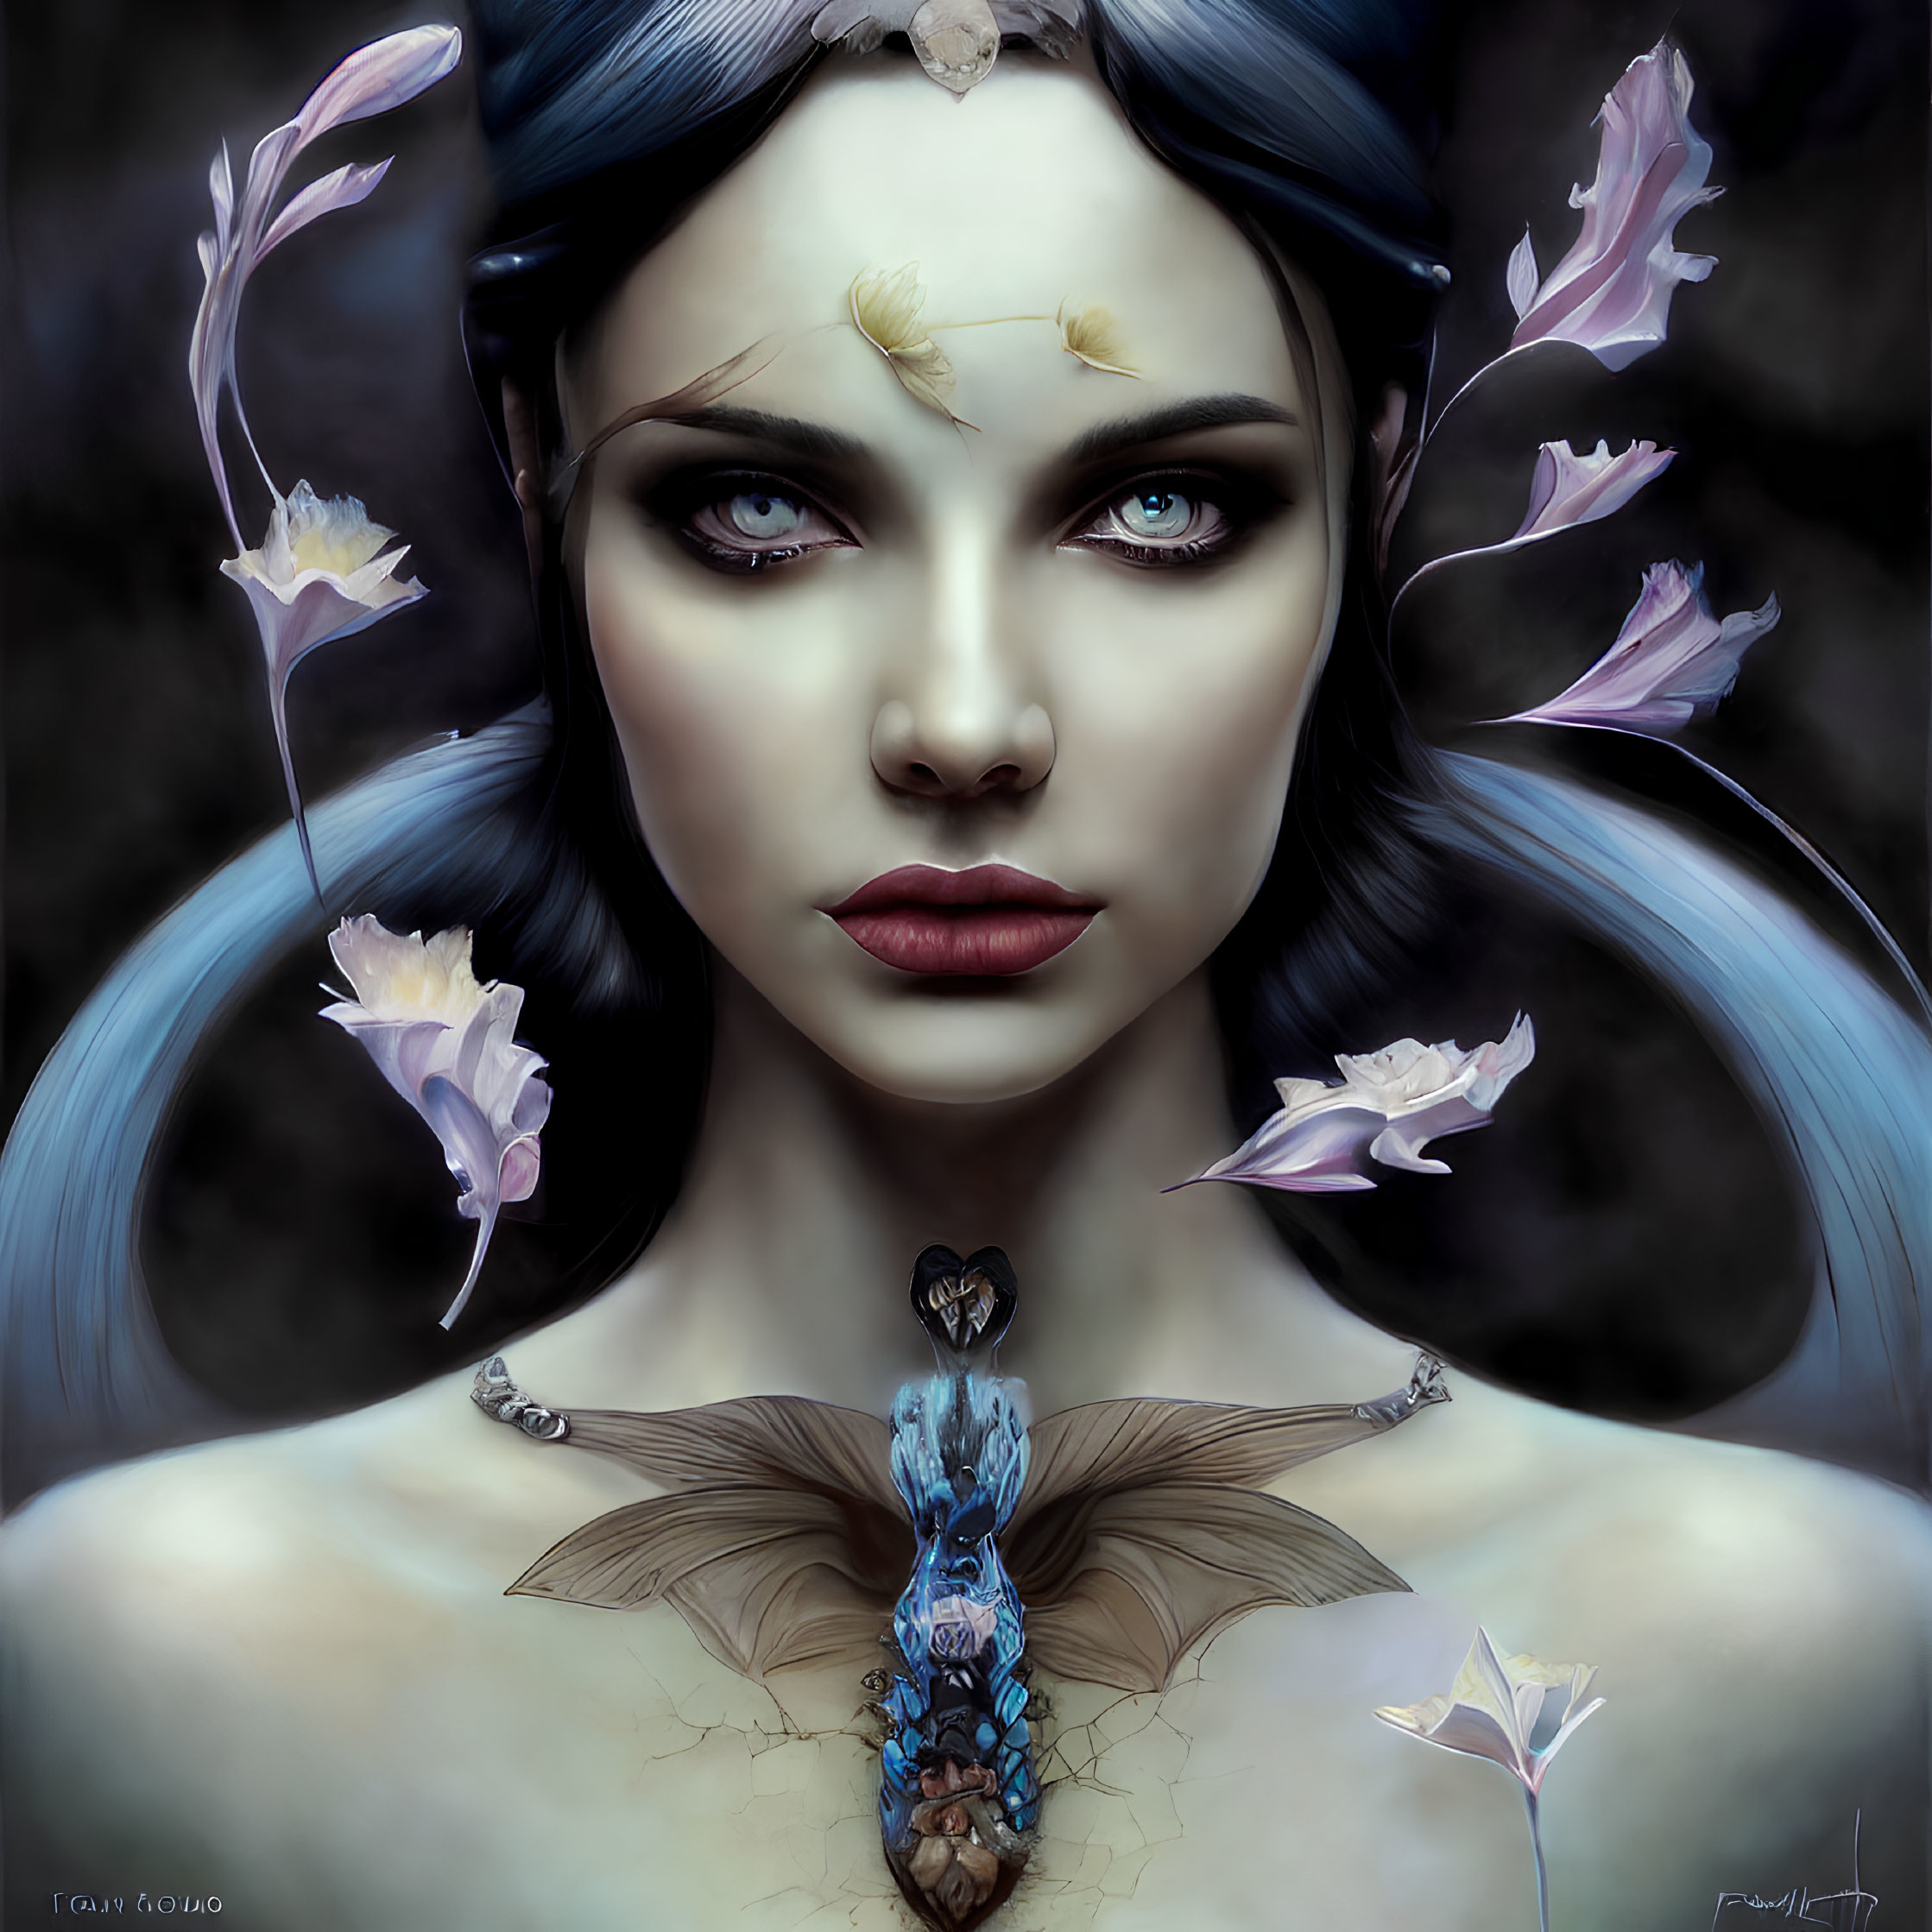 Digital portrait: Woman with blue skin, intense eyes, dark hair, petal-like adornments,